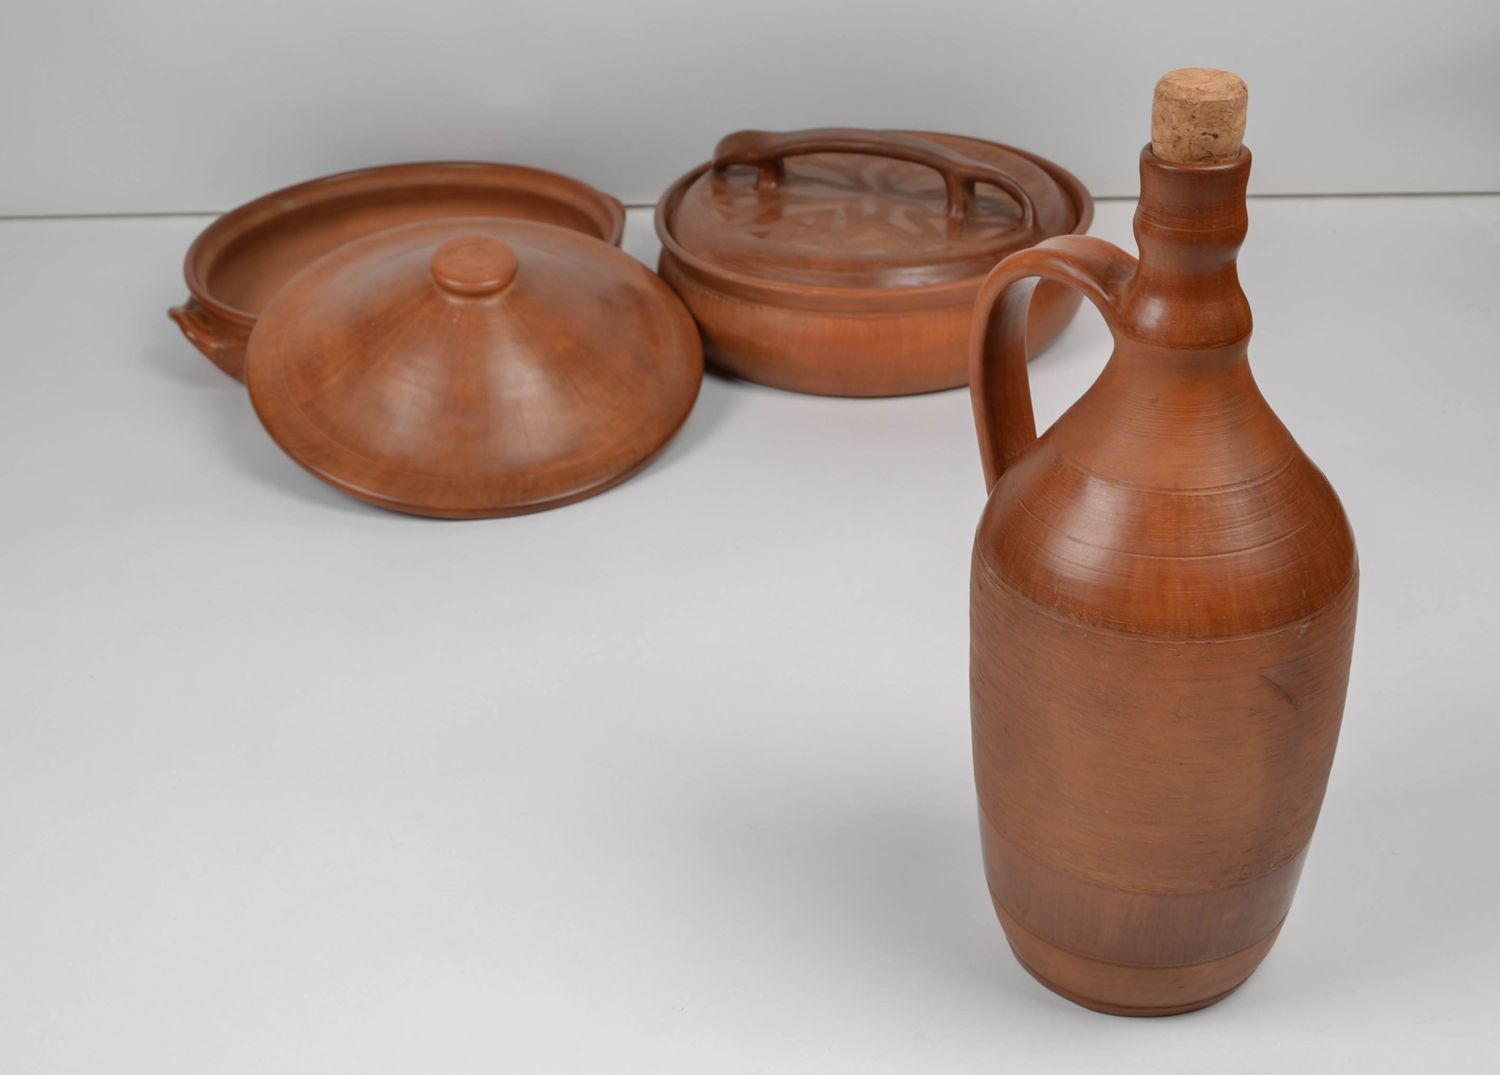 30 oz ceramic terracotta bottle shape wine decanter in ancient style 2,6 lb photo 1